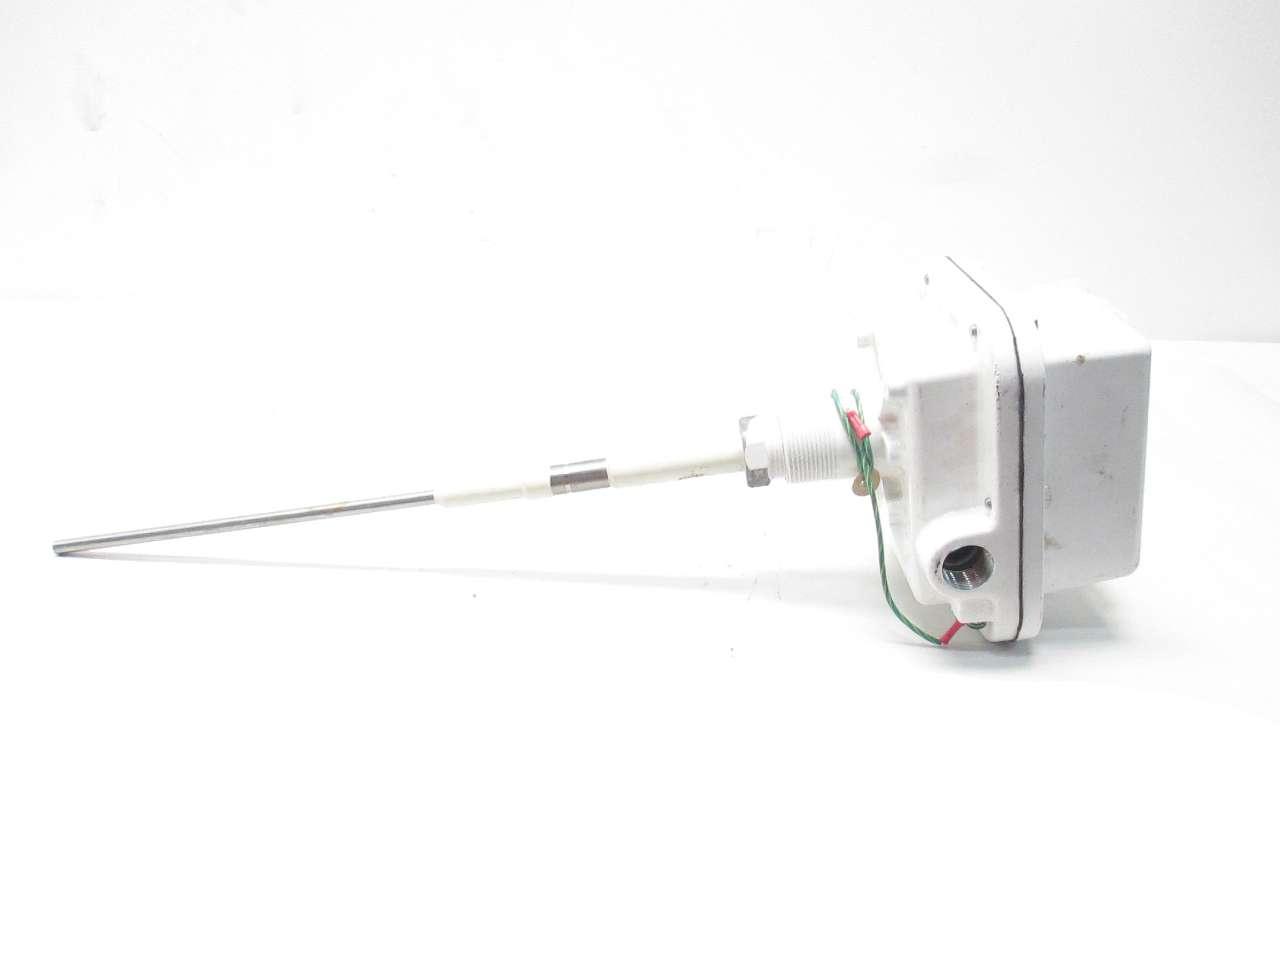 Bindicator RF Series RF 8LOG1N-0 Level Sensor 